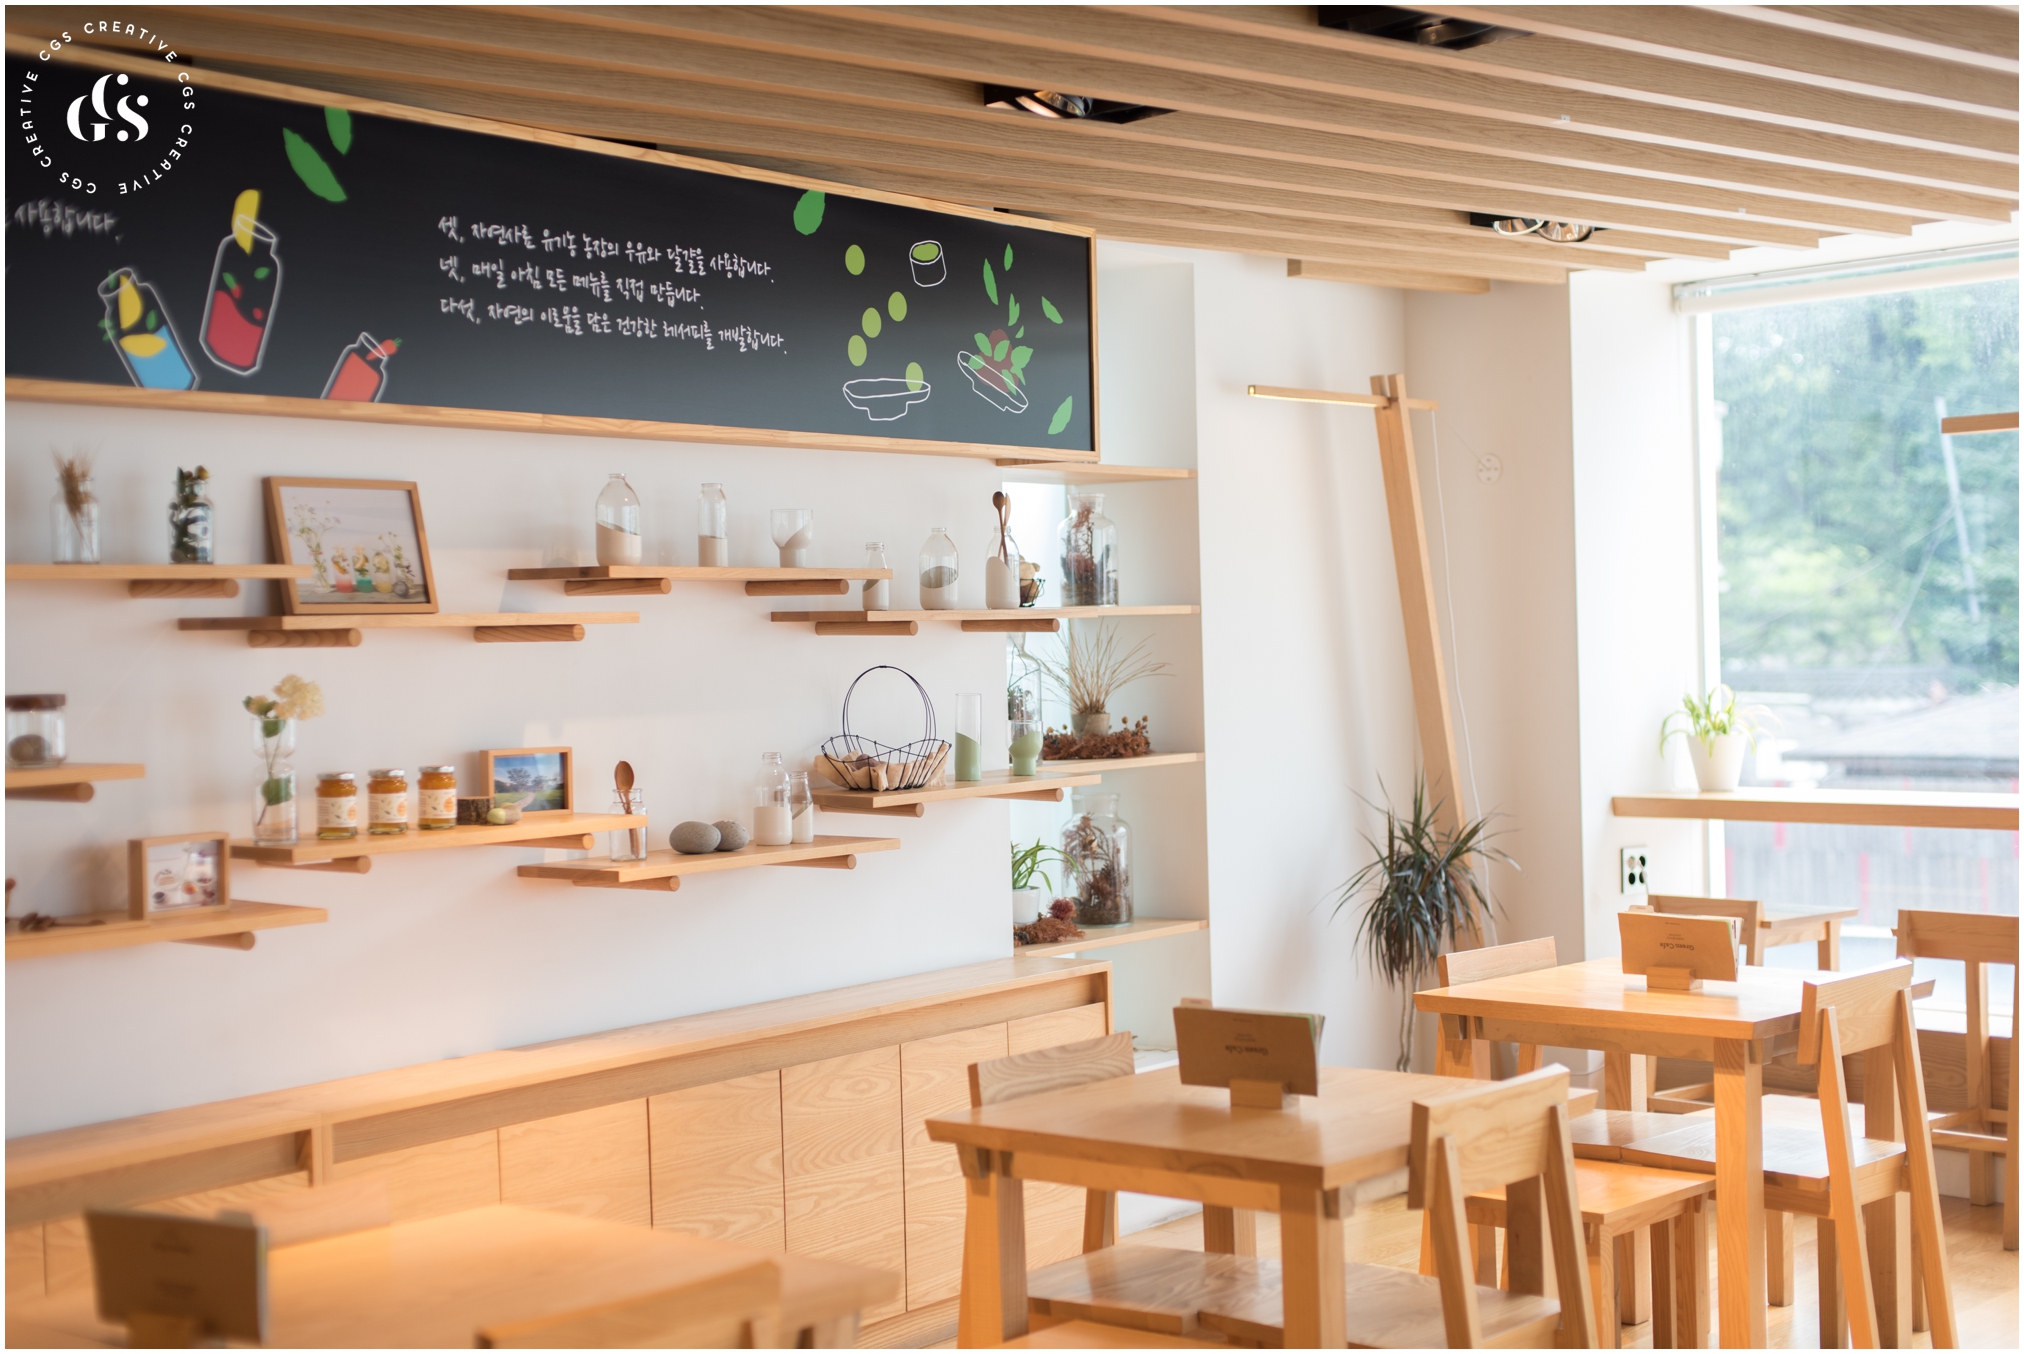 Innisfree Cafe Seoul South Korea CityGirlSearching by Roxy Hutton  (27 of 45).JPG